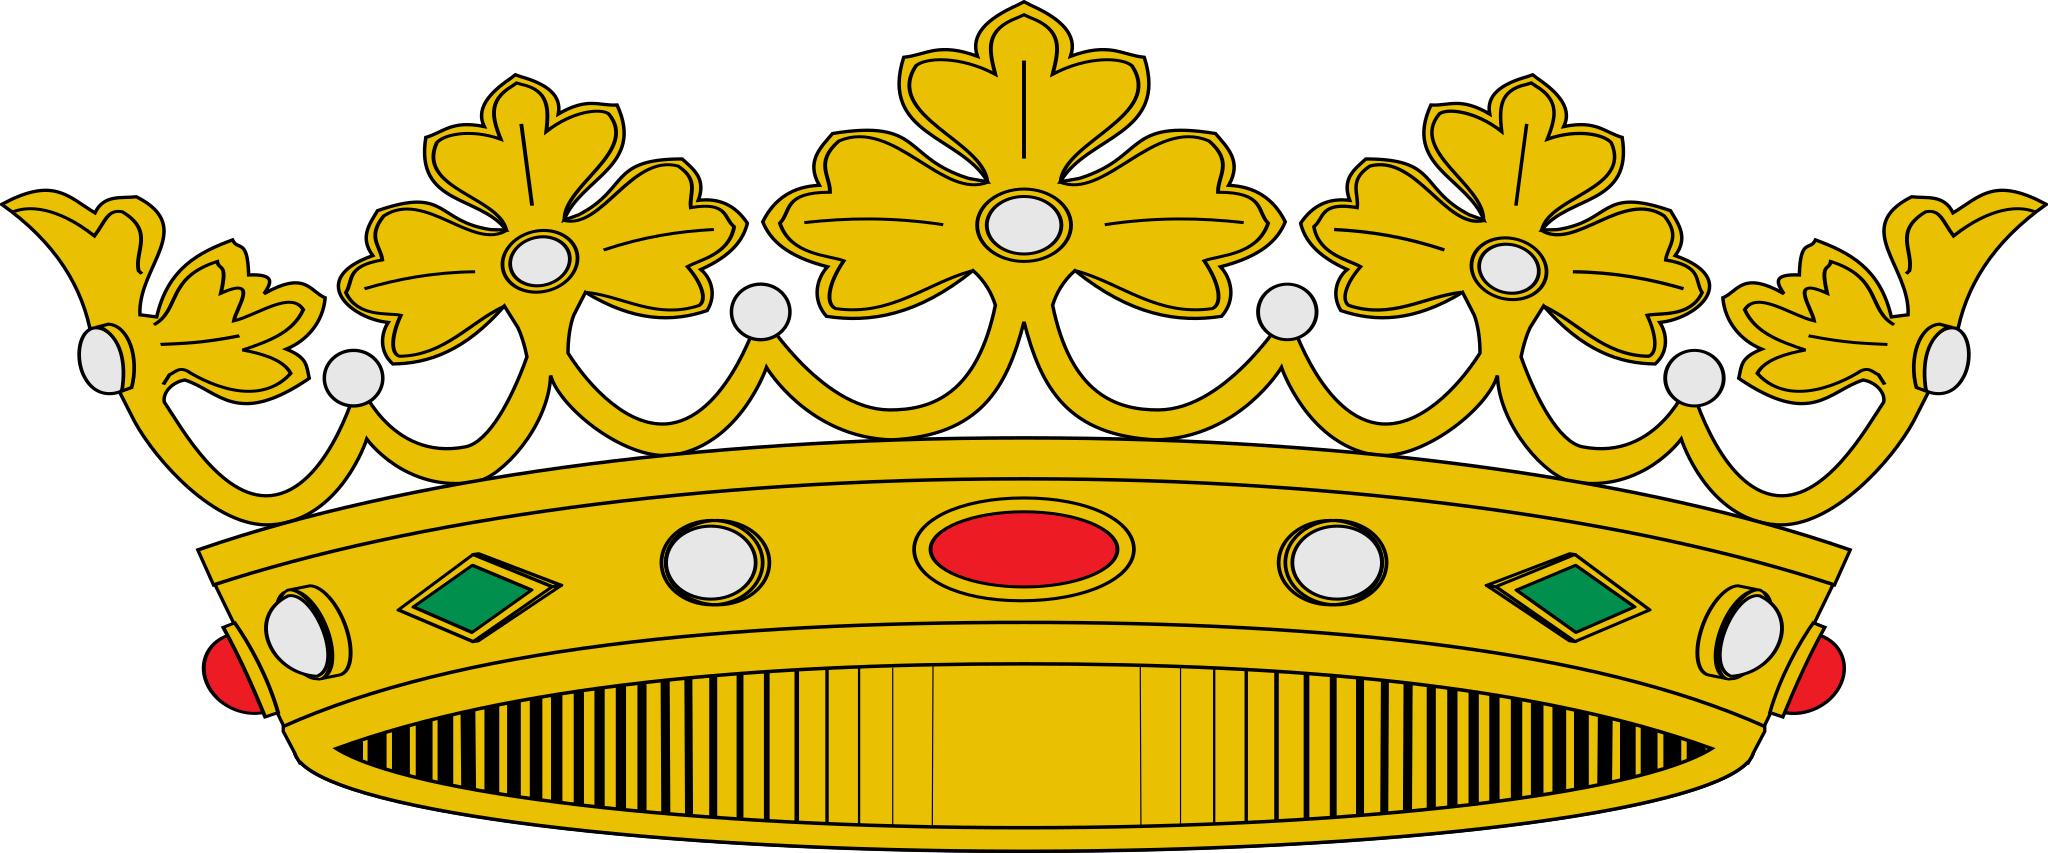 Герб корона какого города. Корона svg. Картинка короны на белом фоне. Royal svg. Герб корона на табуретке.